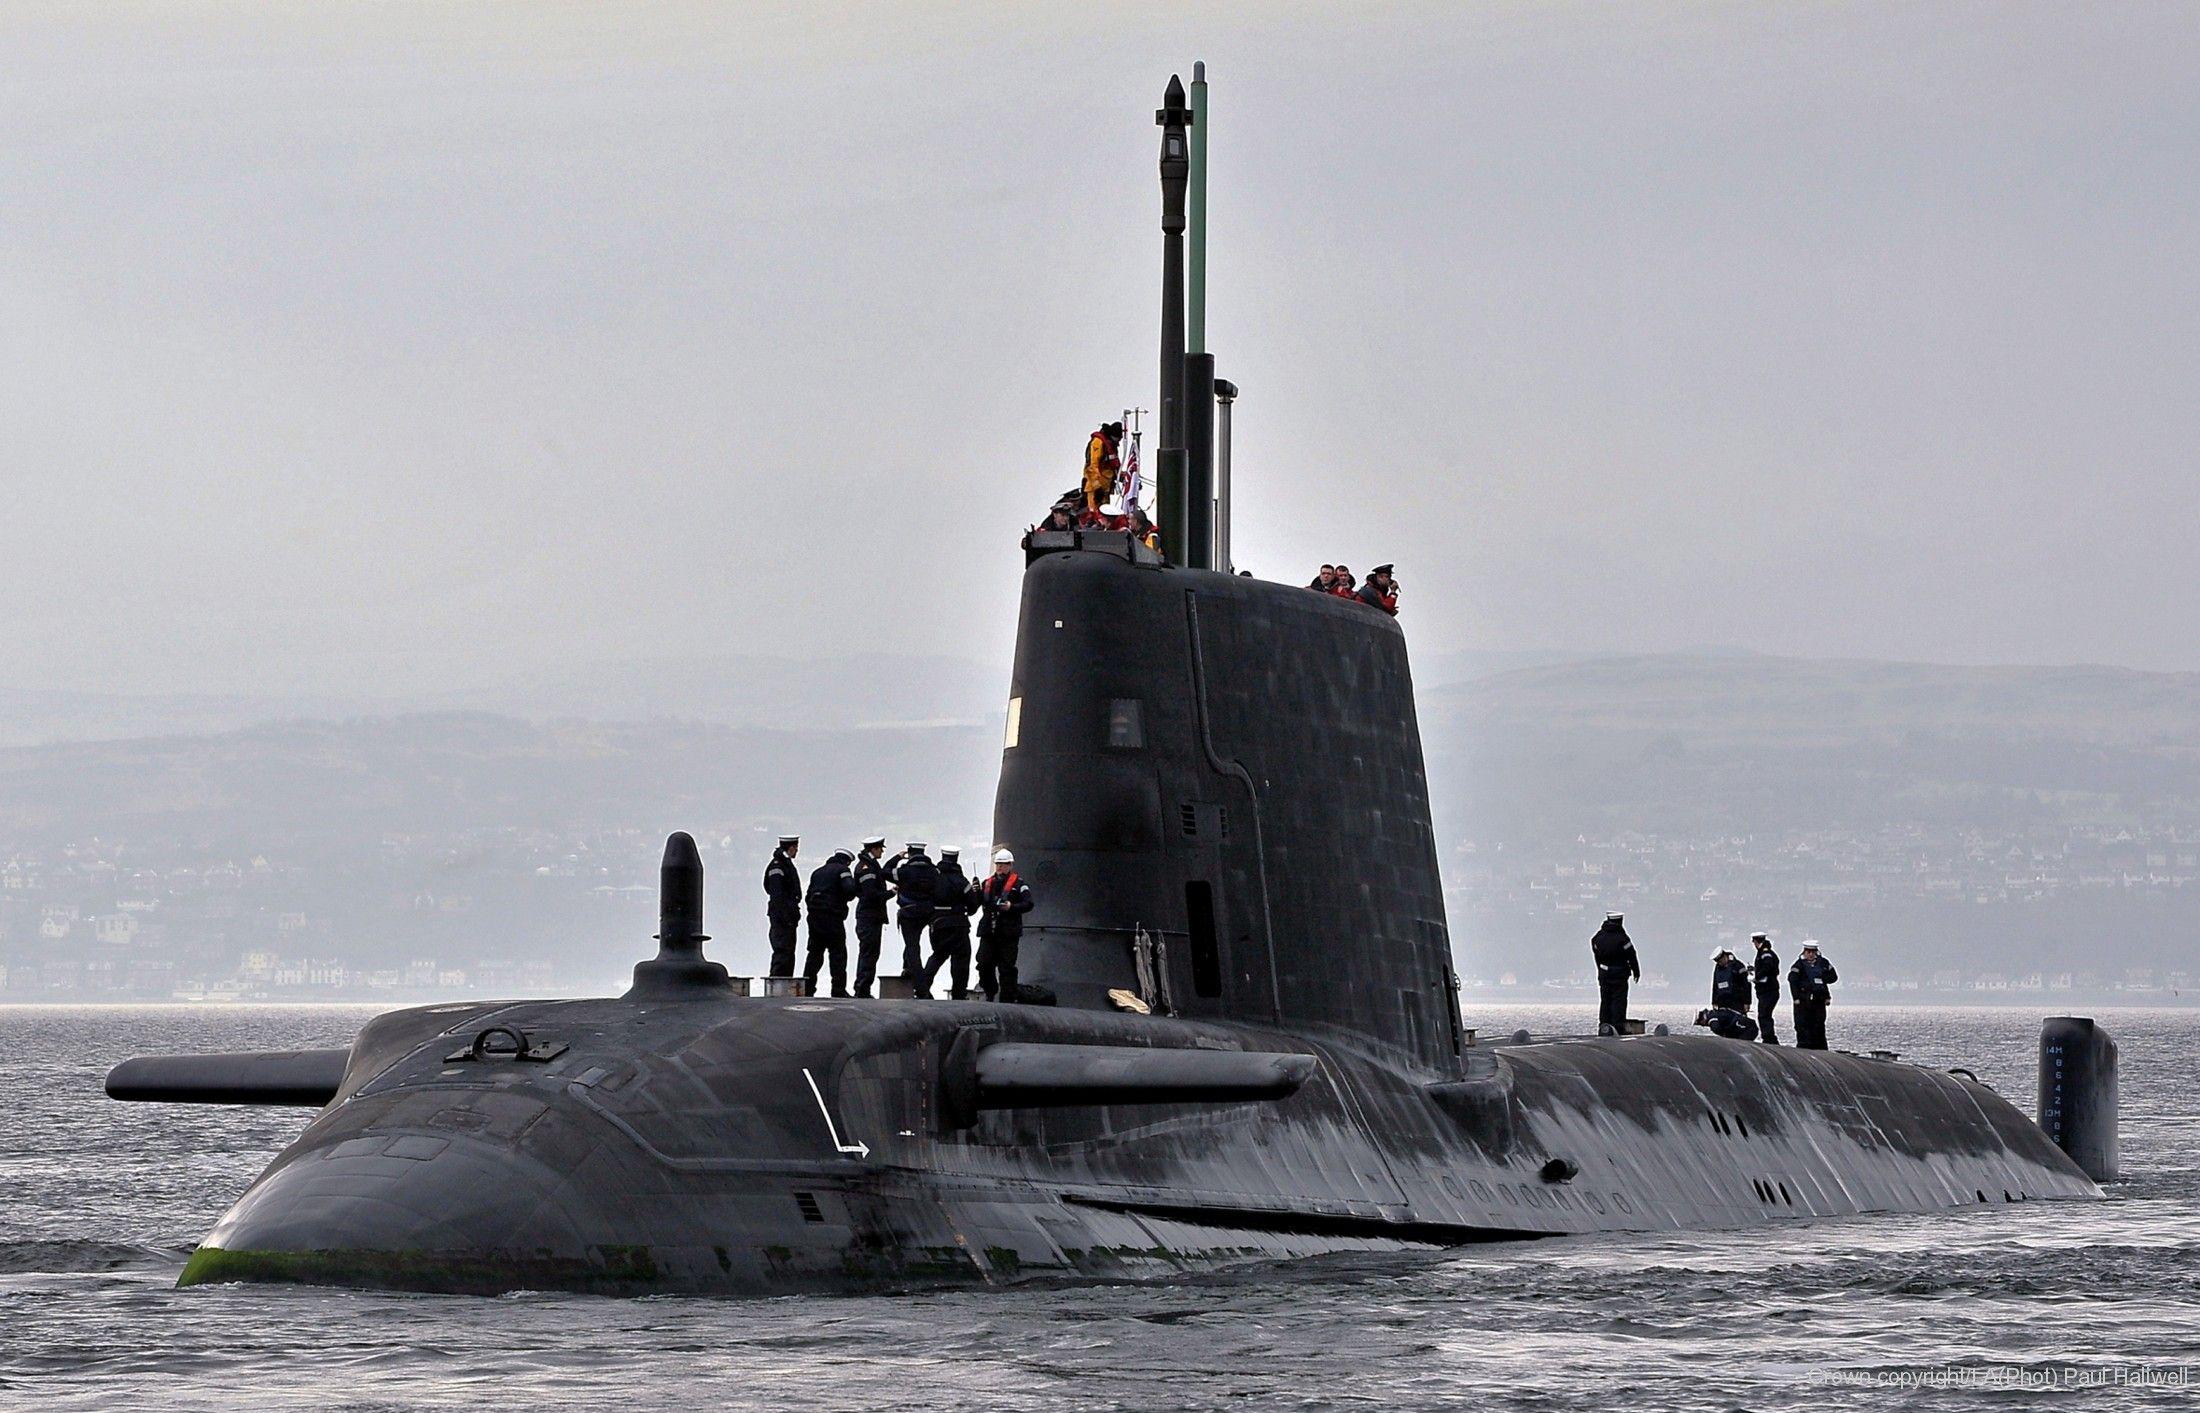 Submarine hull penetration